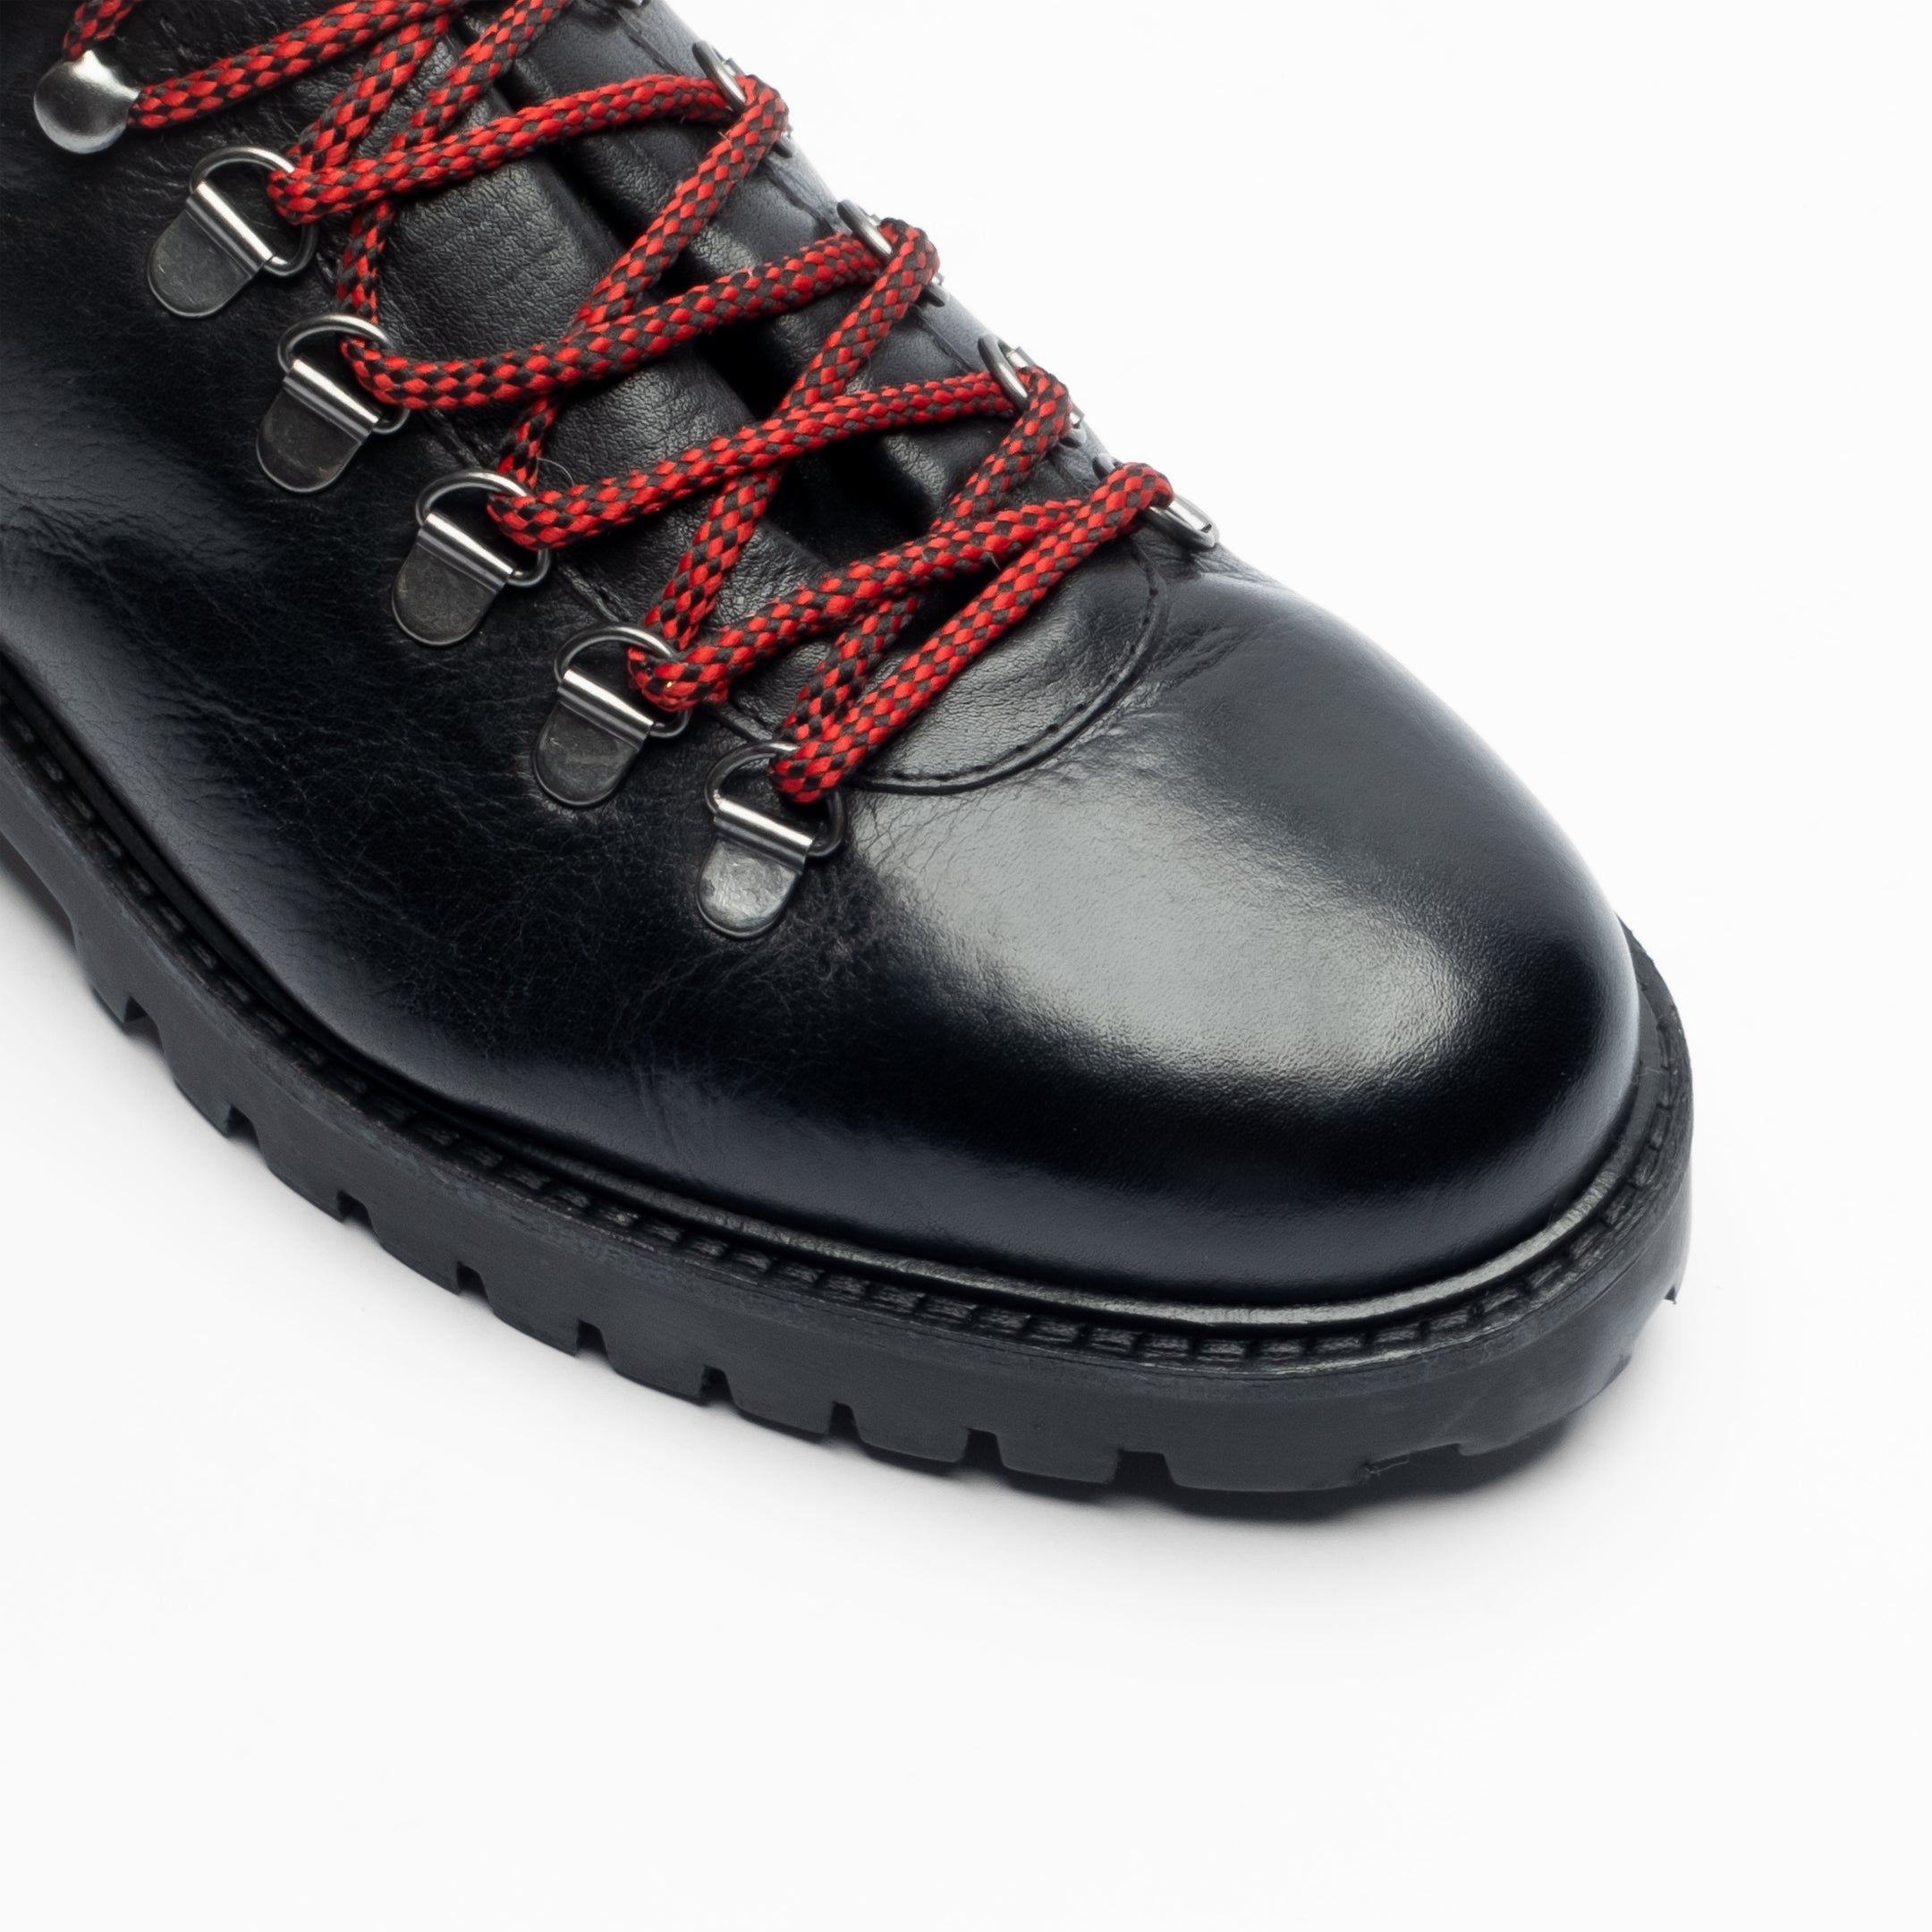 WALK London Sean Low Hiking Boots Black Leather